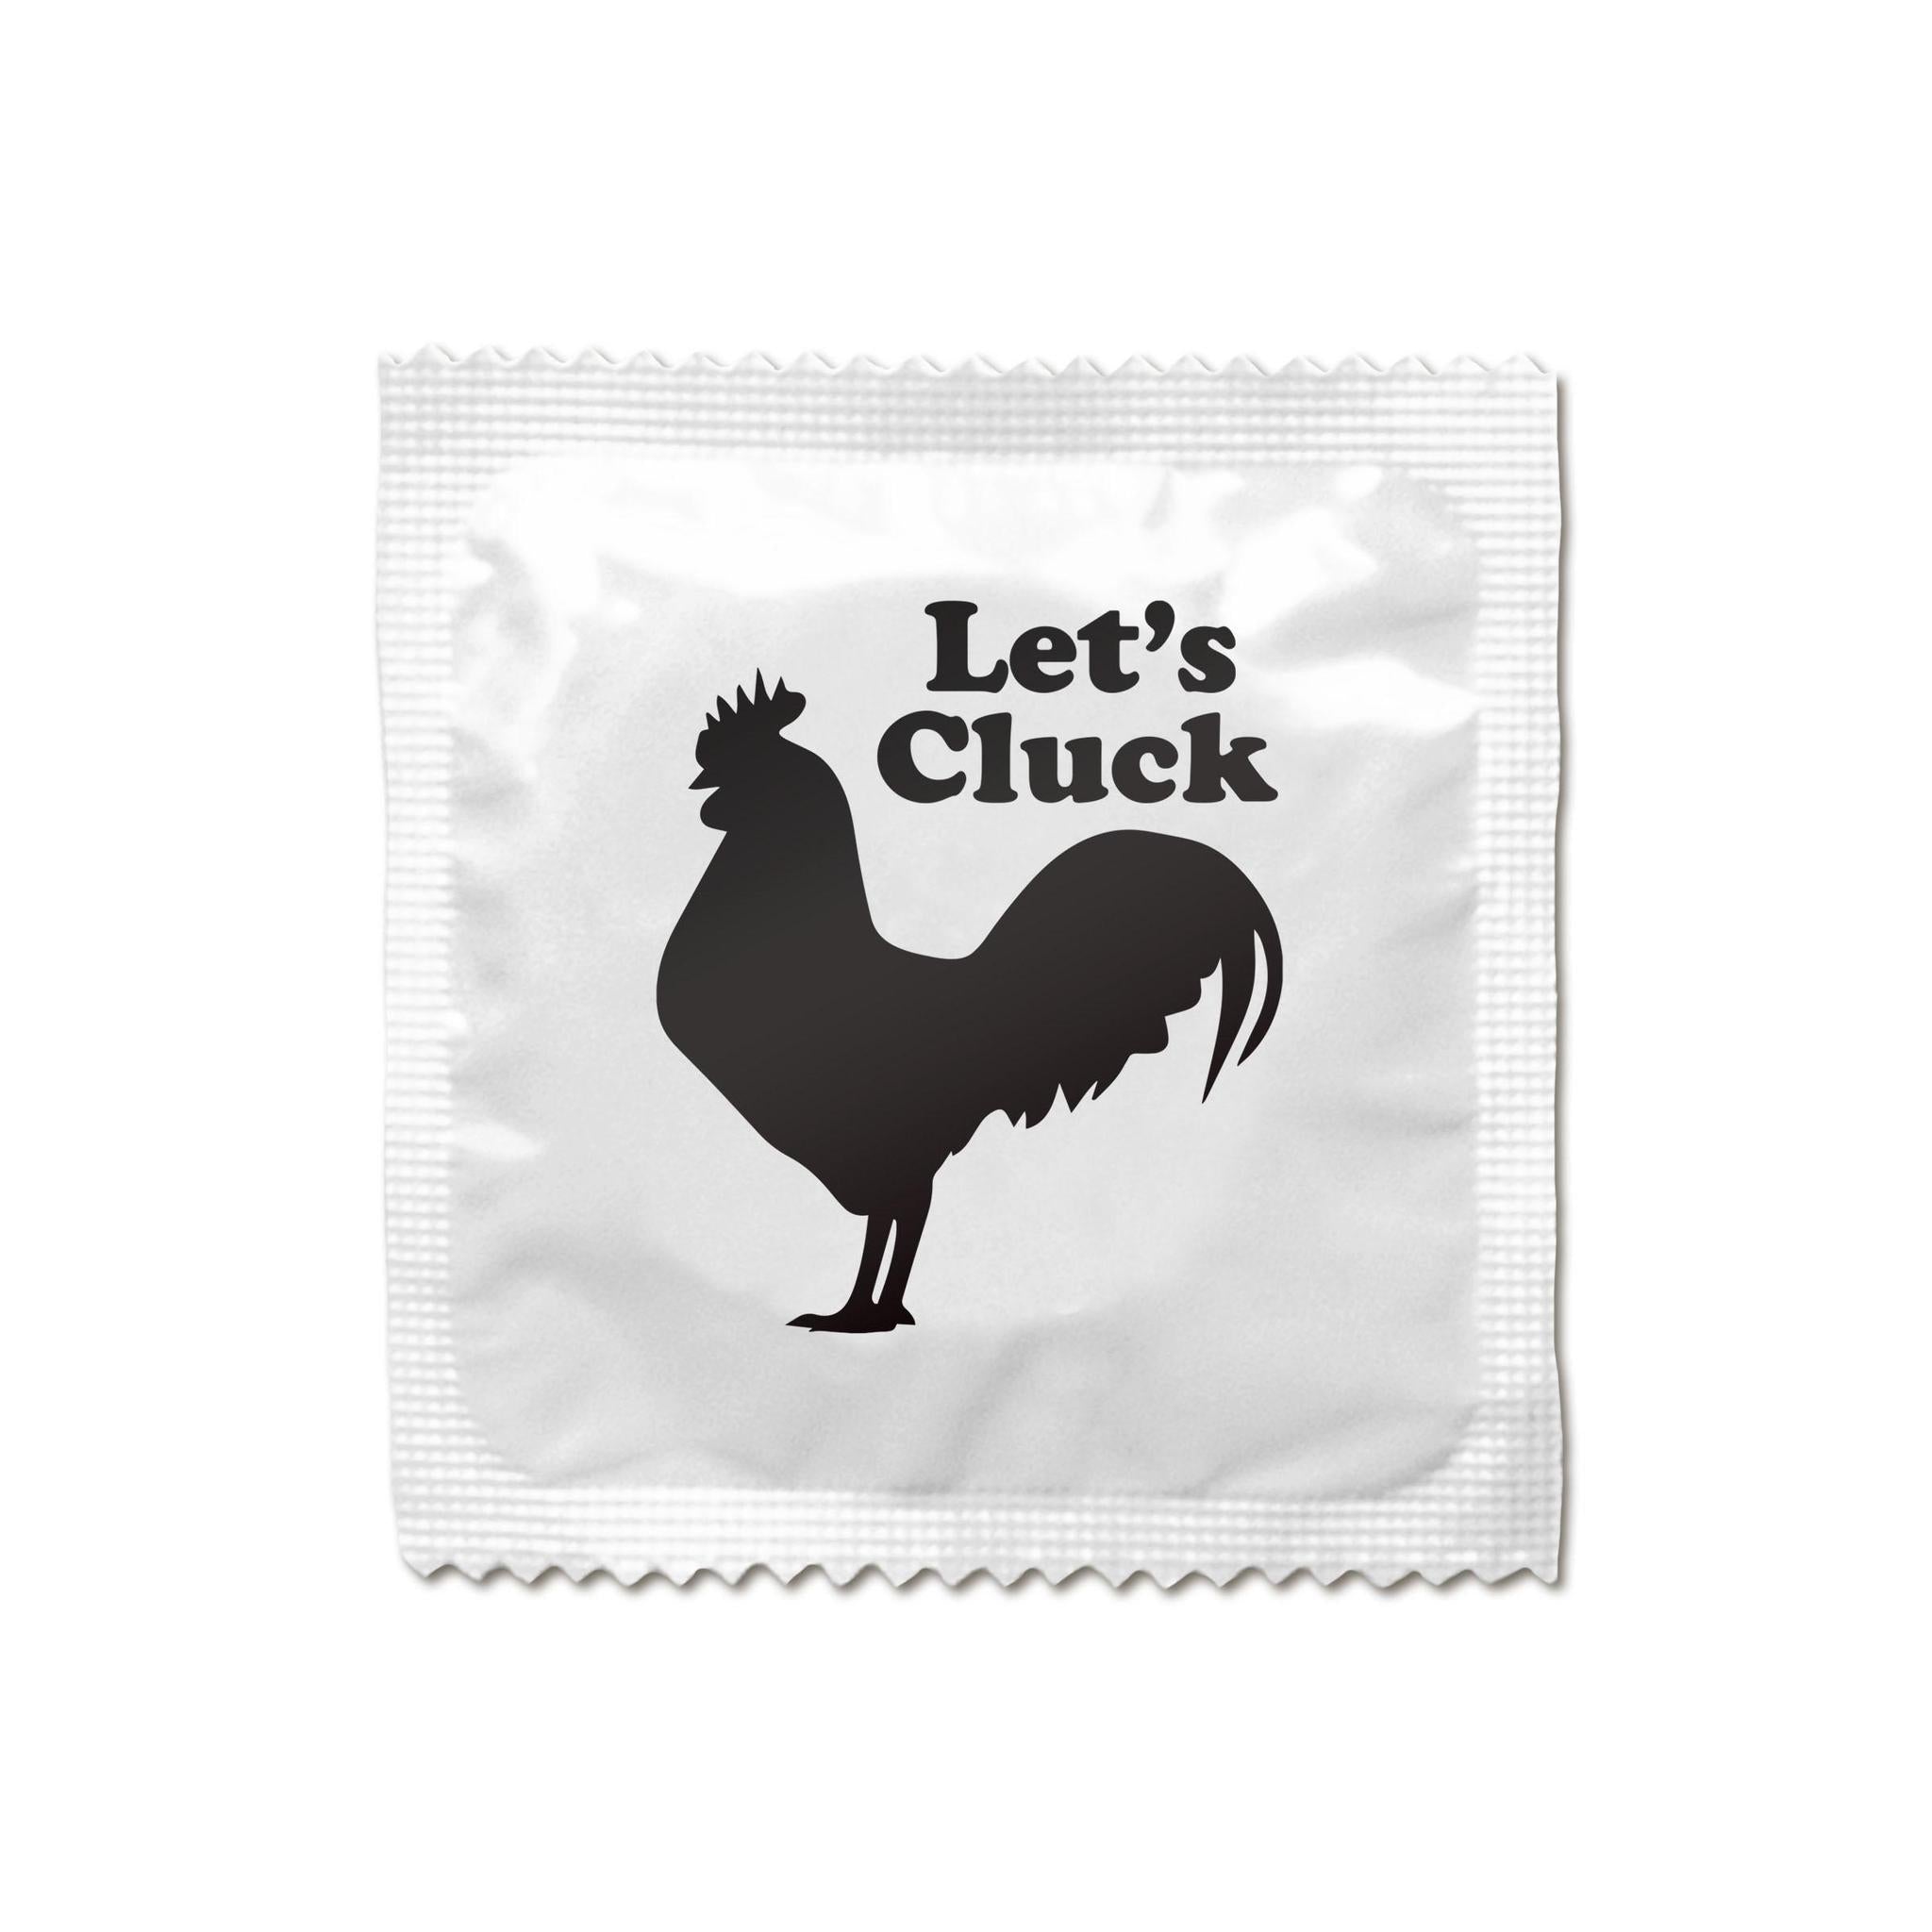 Condom Pack-Southern Socks